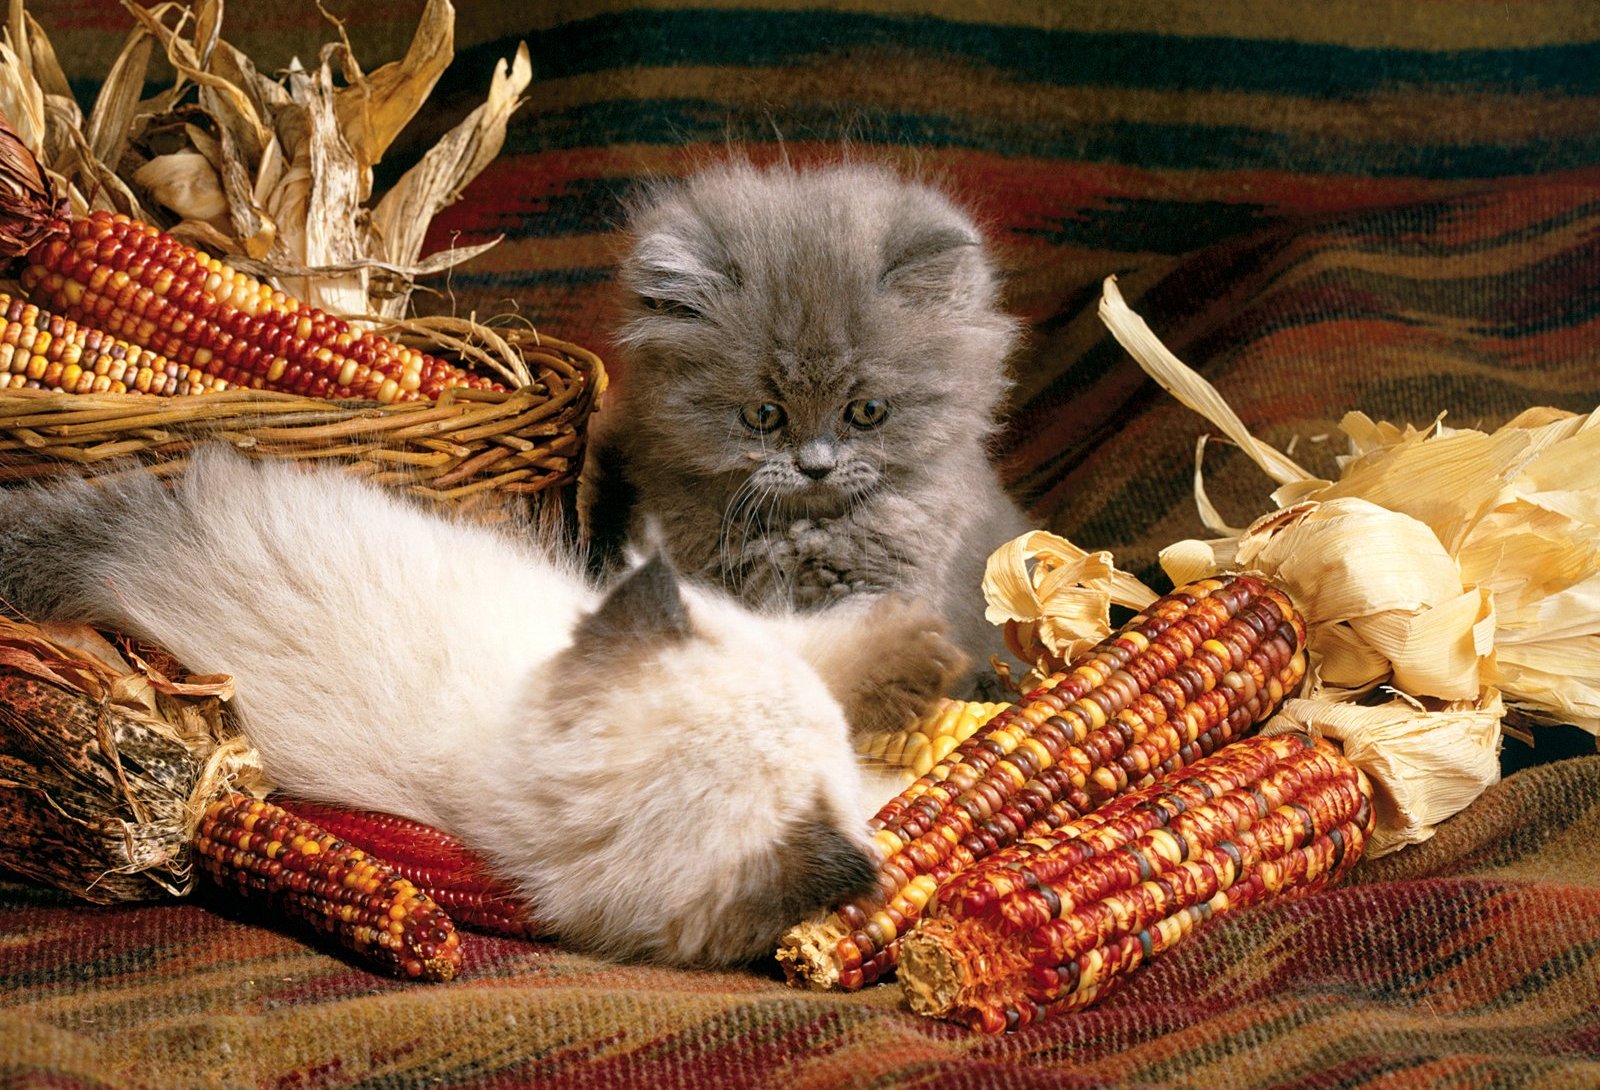 192484 descargar imagen animales, gato, maíz, lindo, gatos: fondos de pantalla y protectores de pantalla gratis